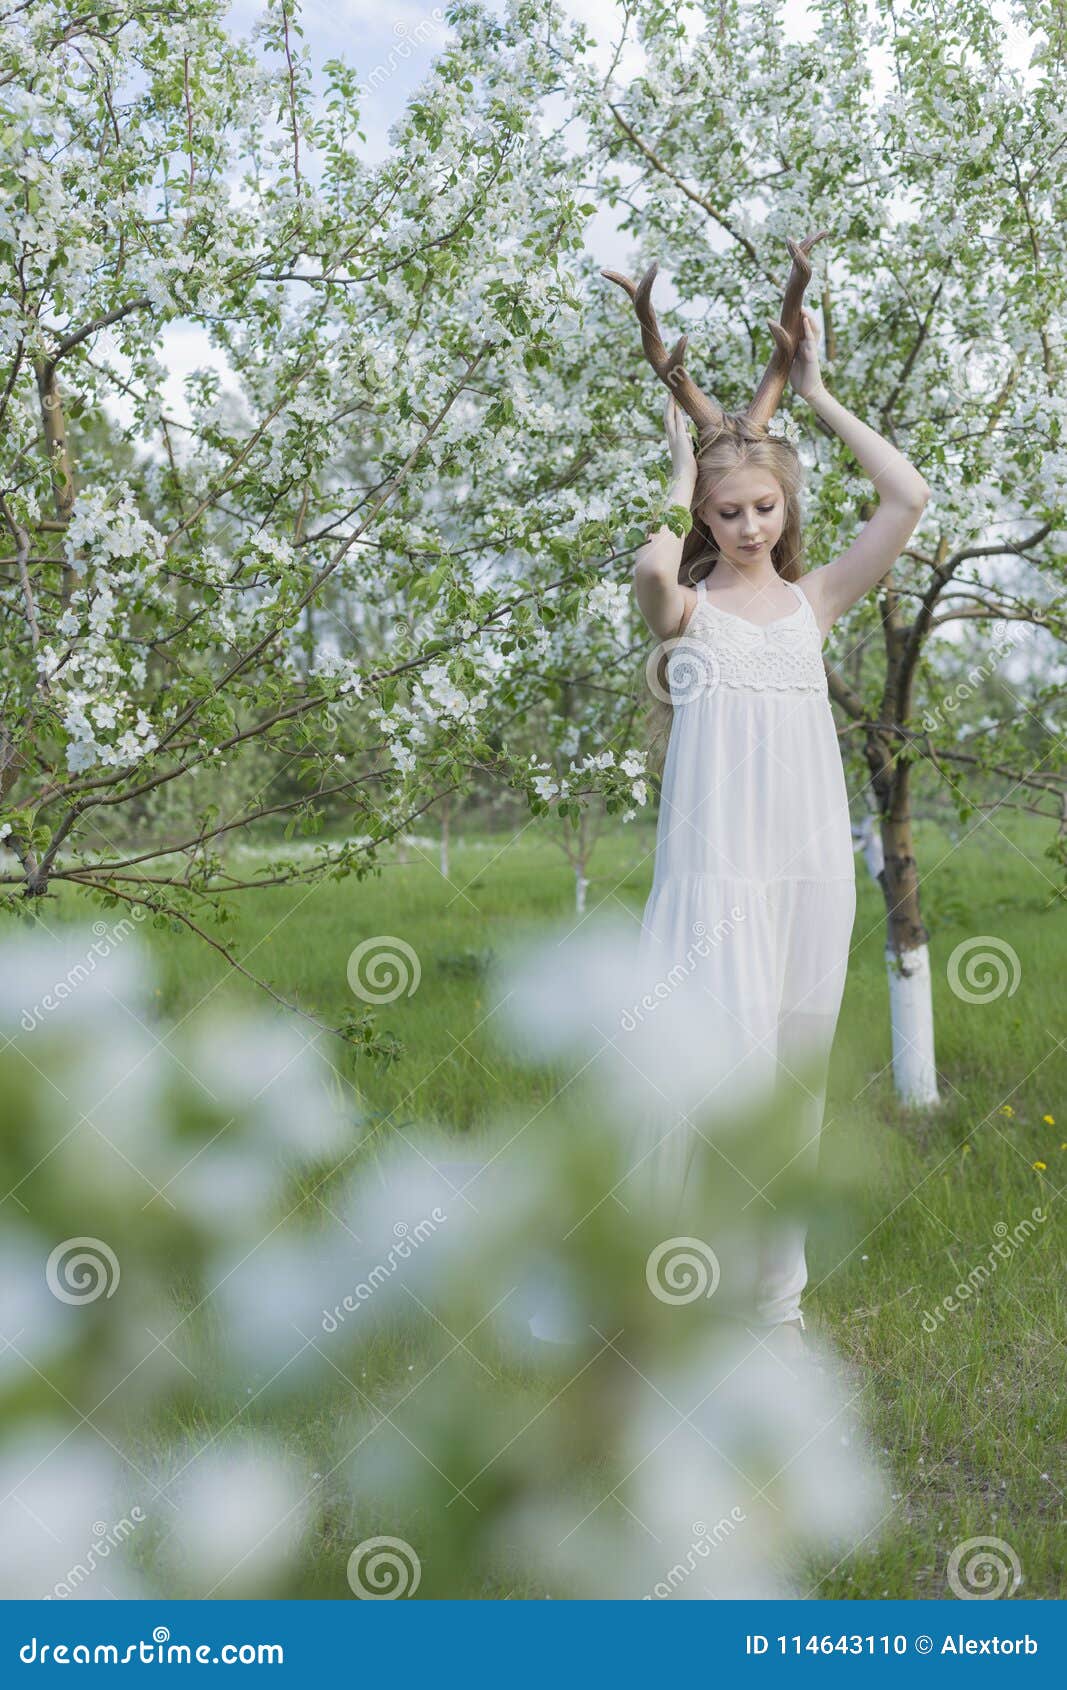 Teen Beautiful Blonde Girl Wearing White Dress With Deer